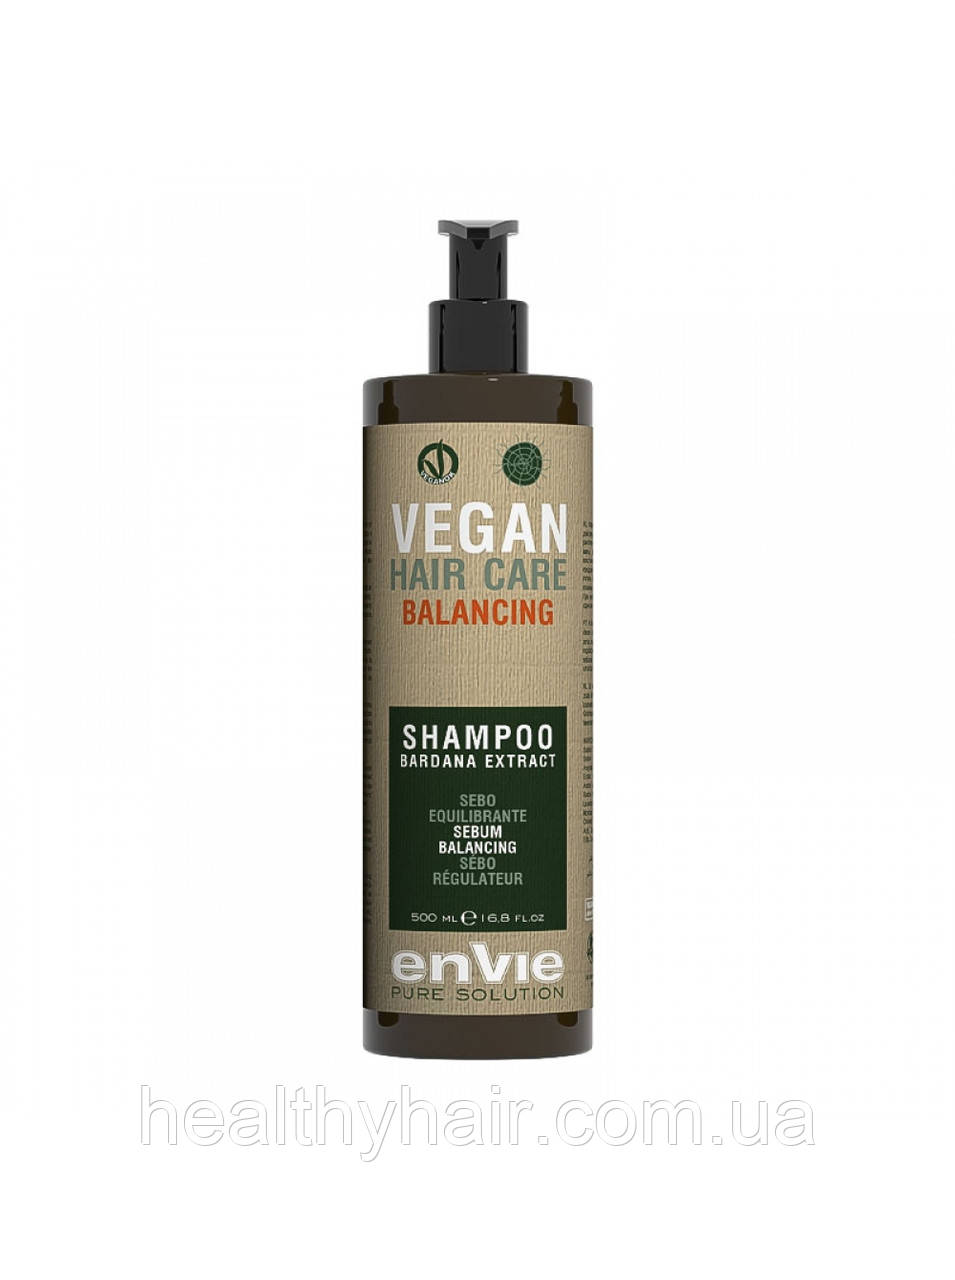 Балансуючий шампунь Envie Vegan Balancing Shampoo Bardana Extract для жирної шкіри голови з екстрактом реп'яха